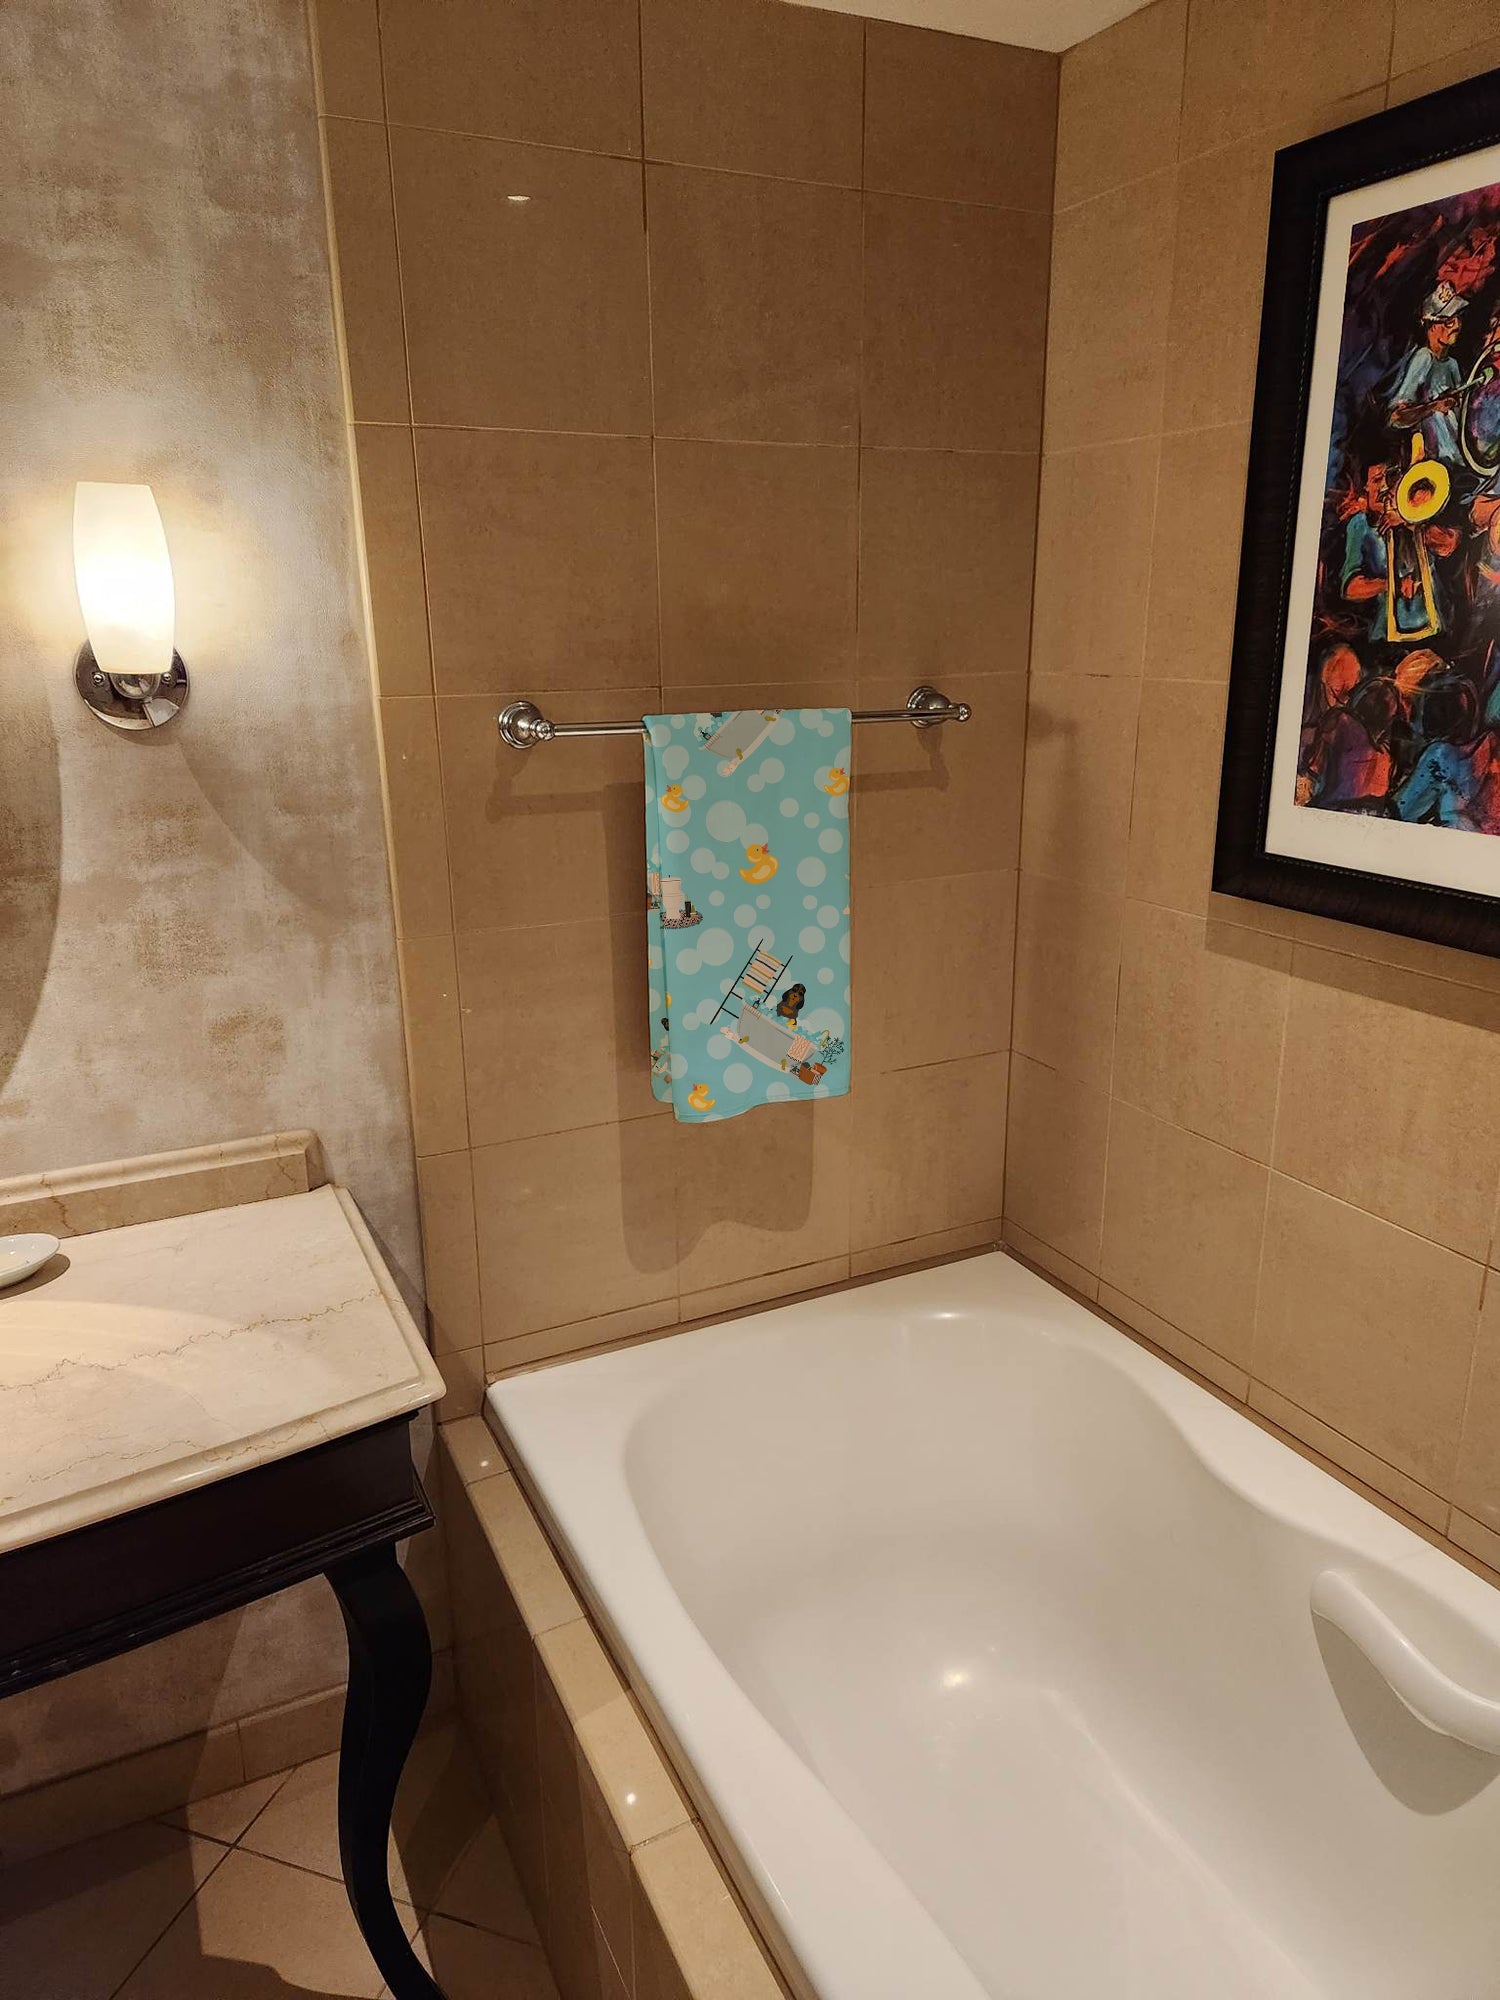 Buy this Black Tan Cocker Spaniel in Bathtub Bath Towel Large